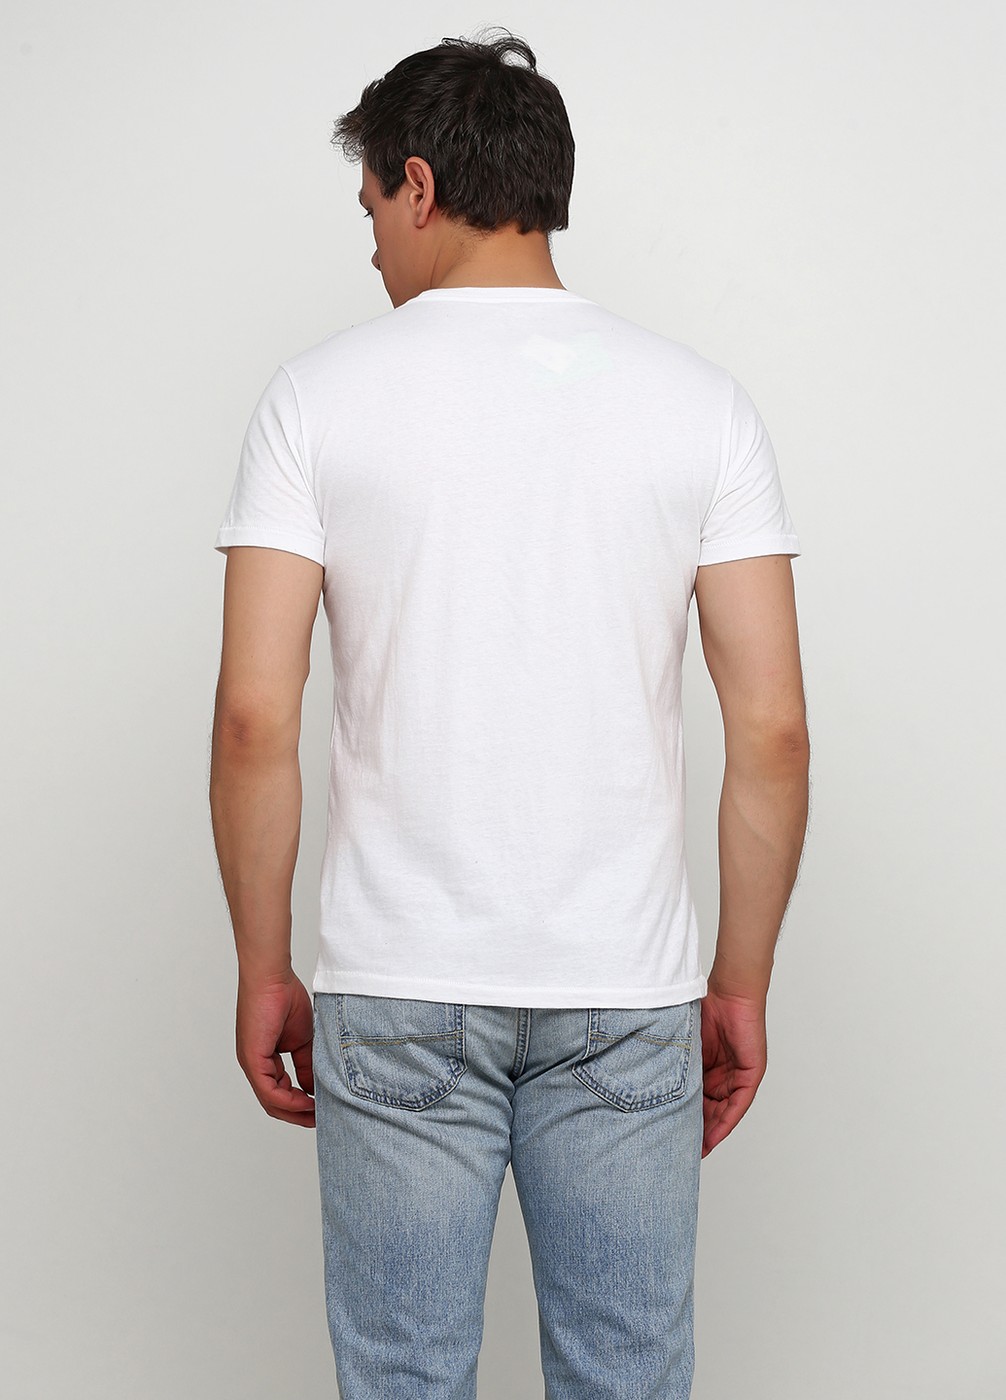 Белая футболка - мужская футболка Aeropostale, S, S